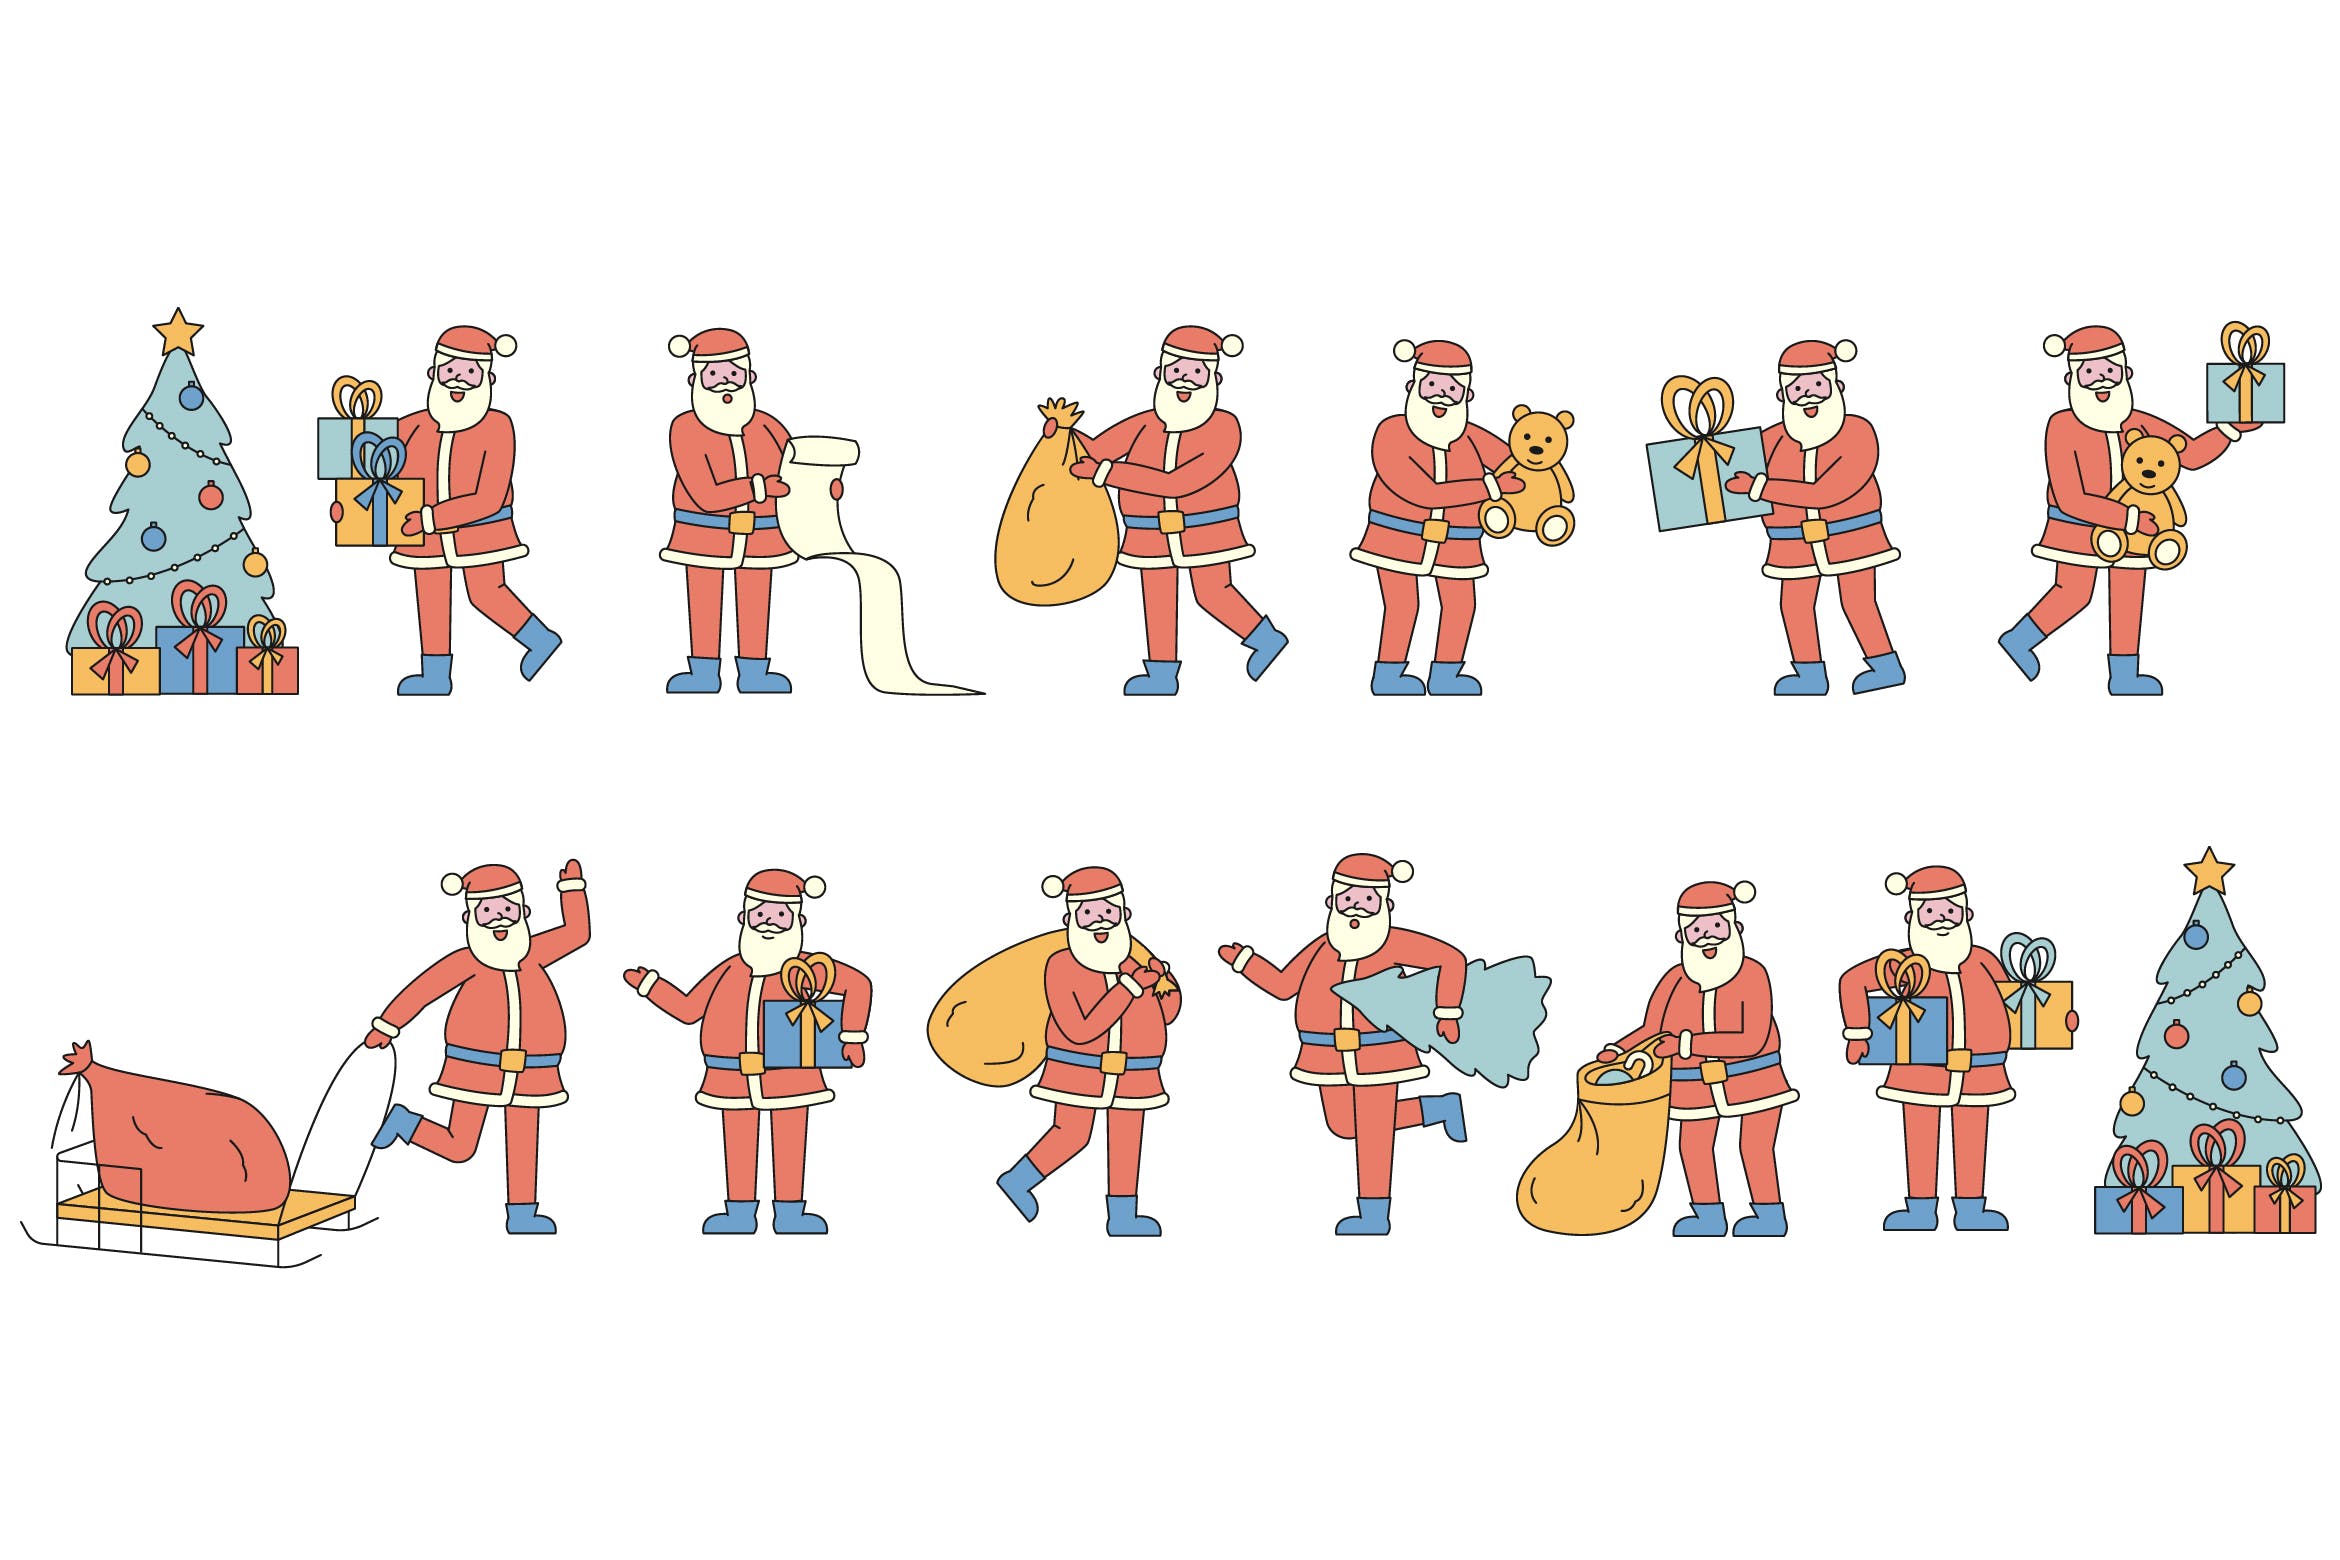 圣诞老人人物形象线条艺术矢量插画素材 Santa Claus Lineart People Character Collection插图